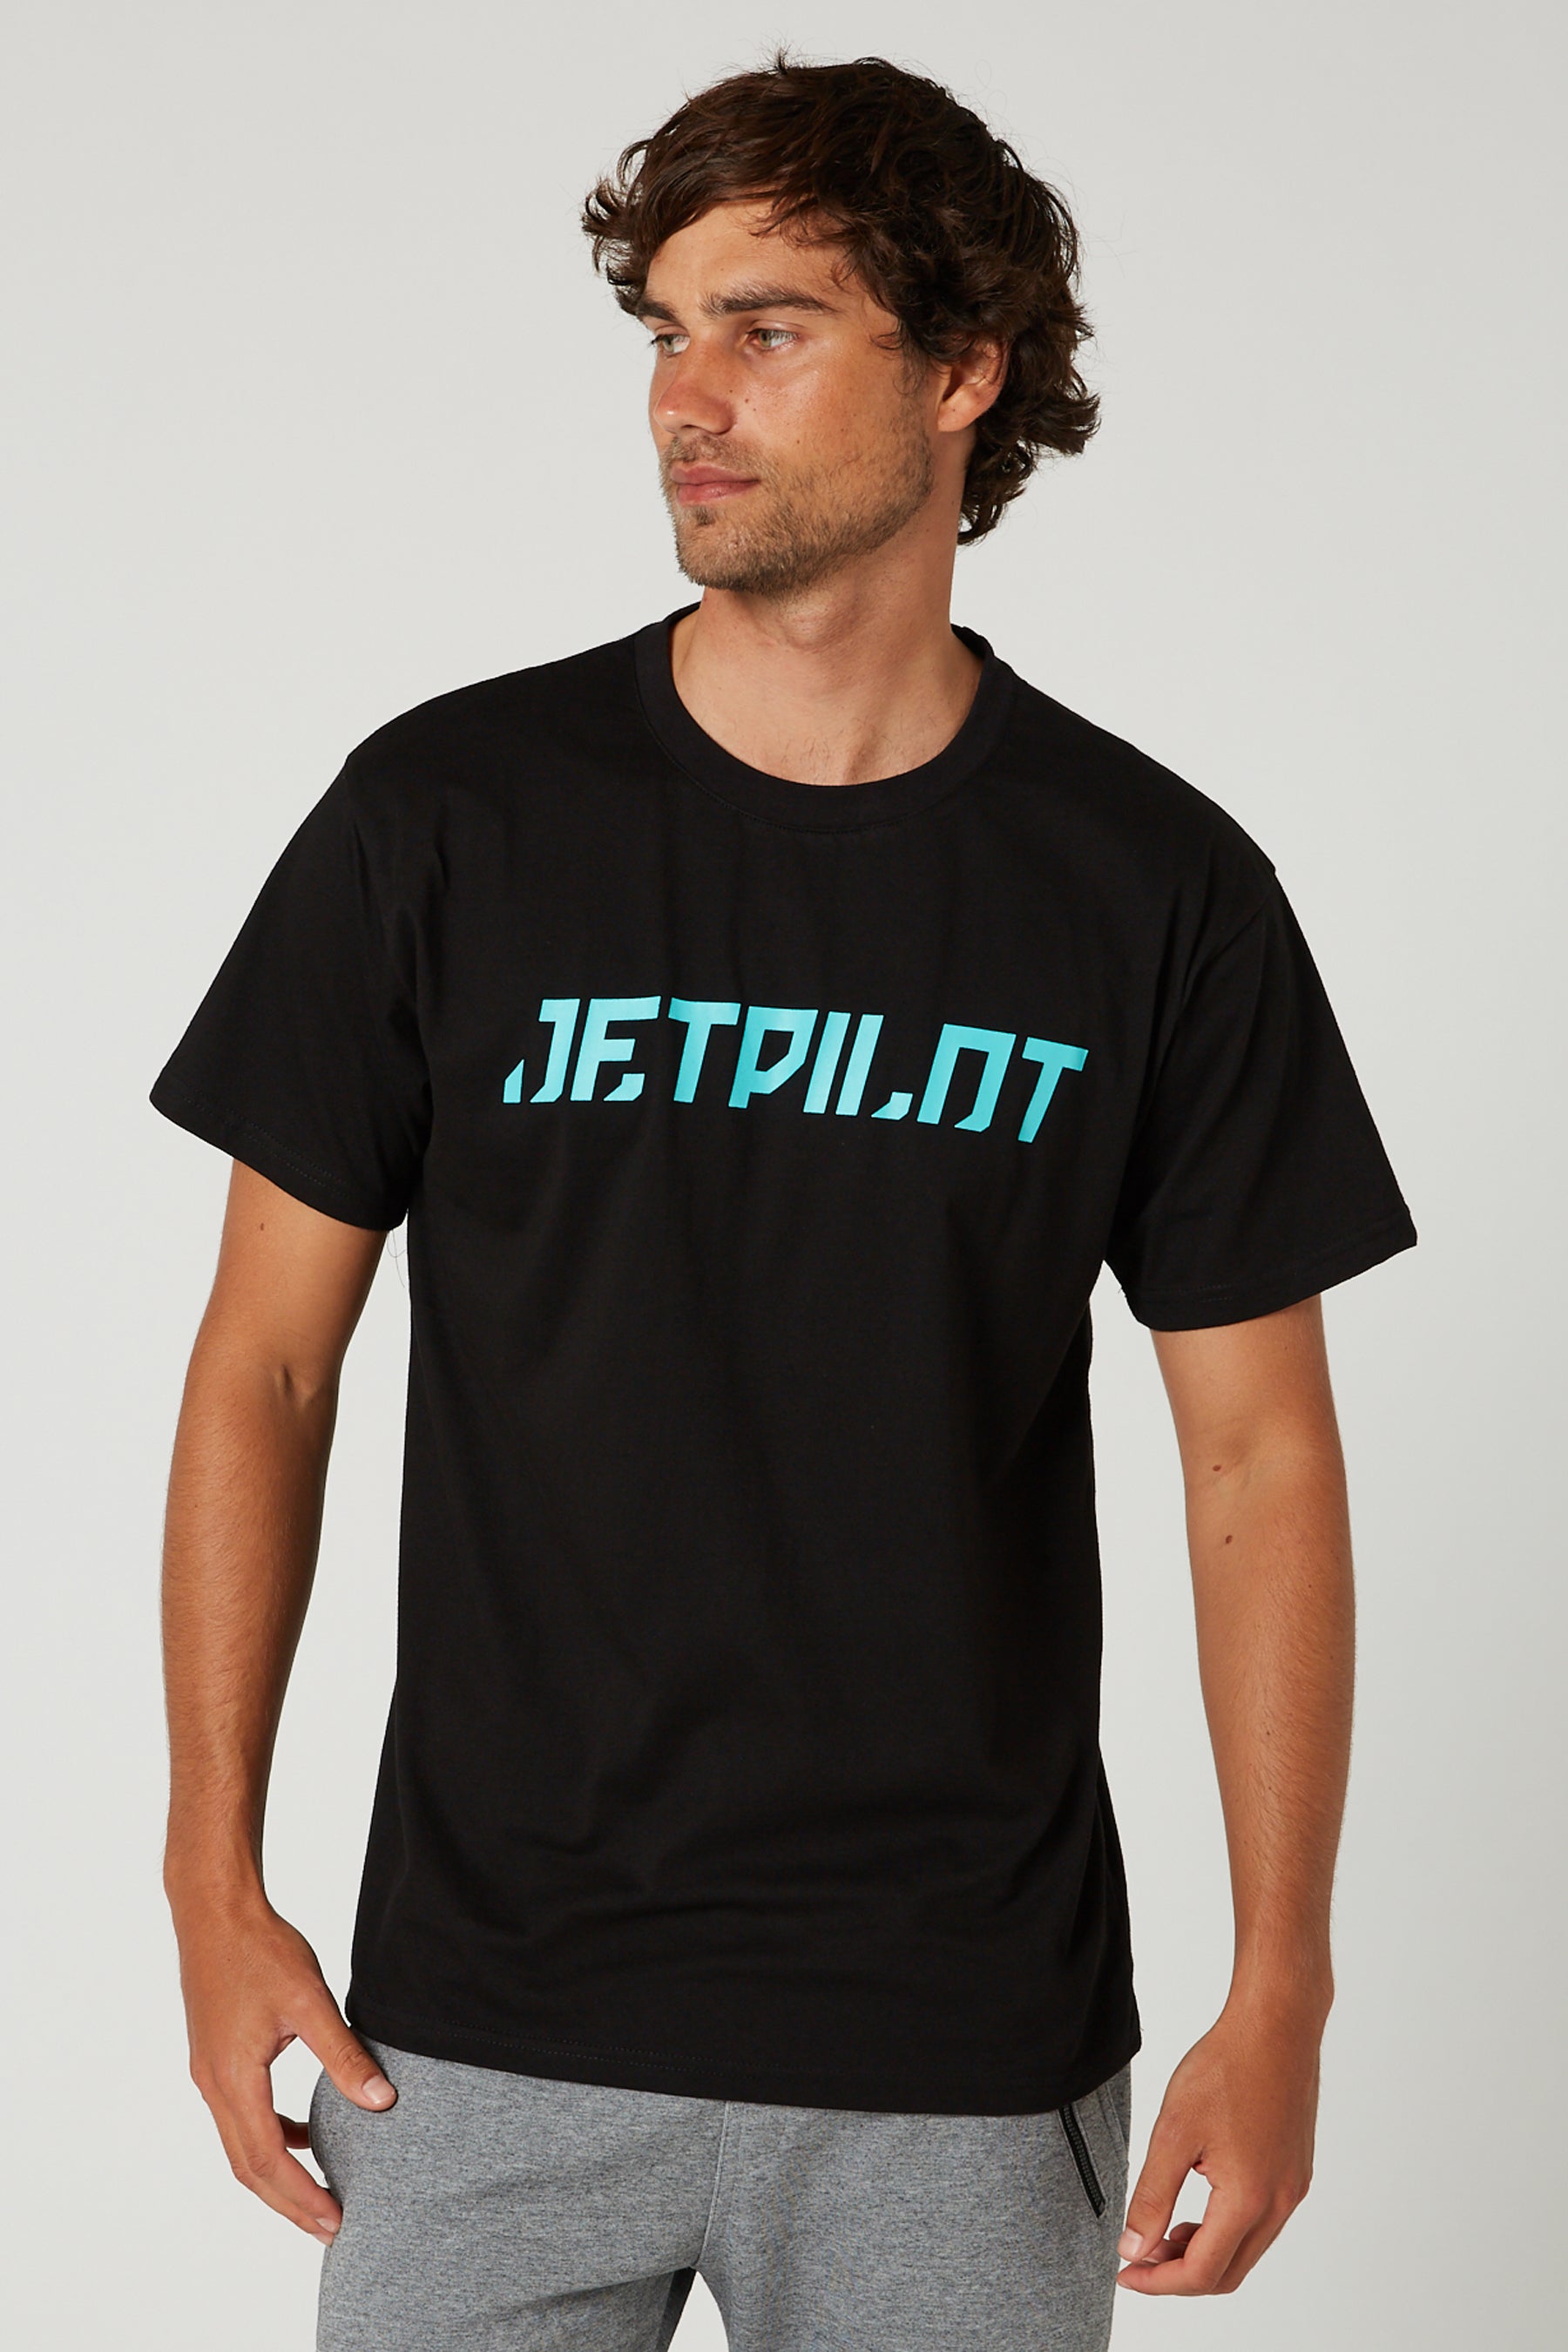 Jetpilot Corp Mens Tee - Black